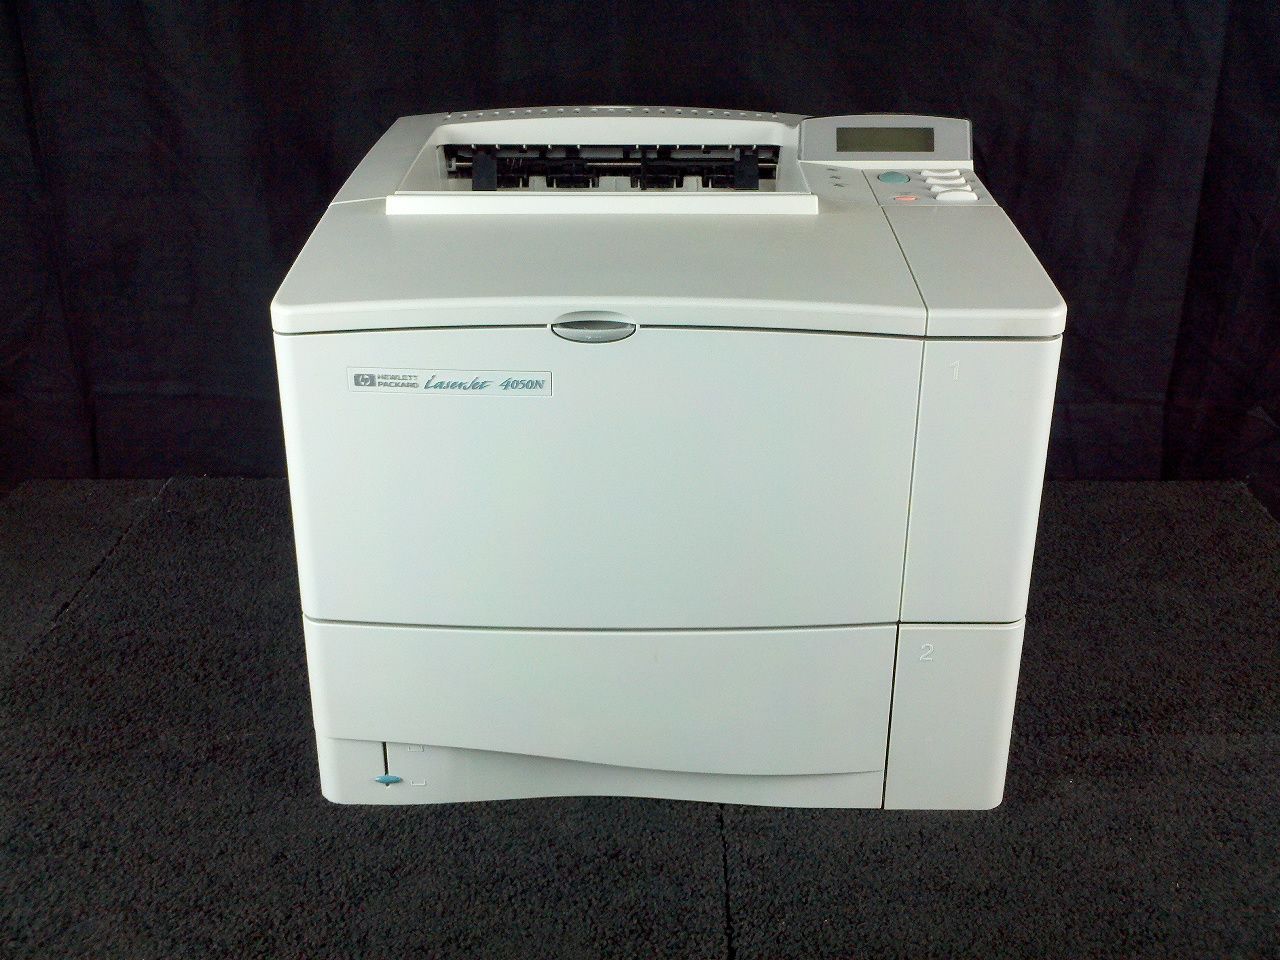 HP LaserJet 4050 Printer Page Count 183690